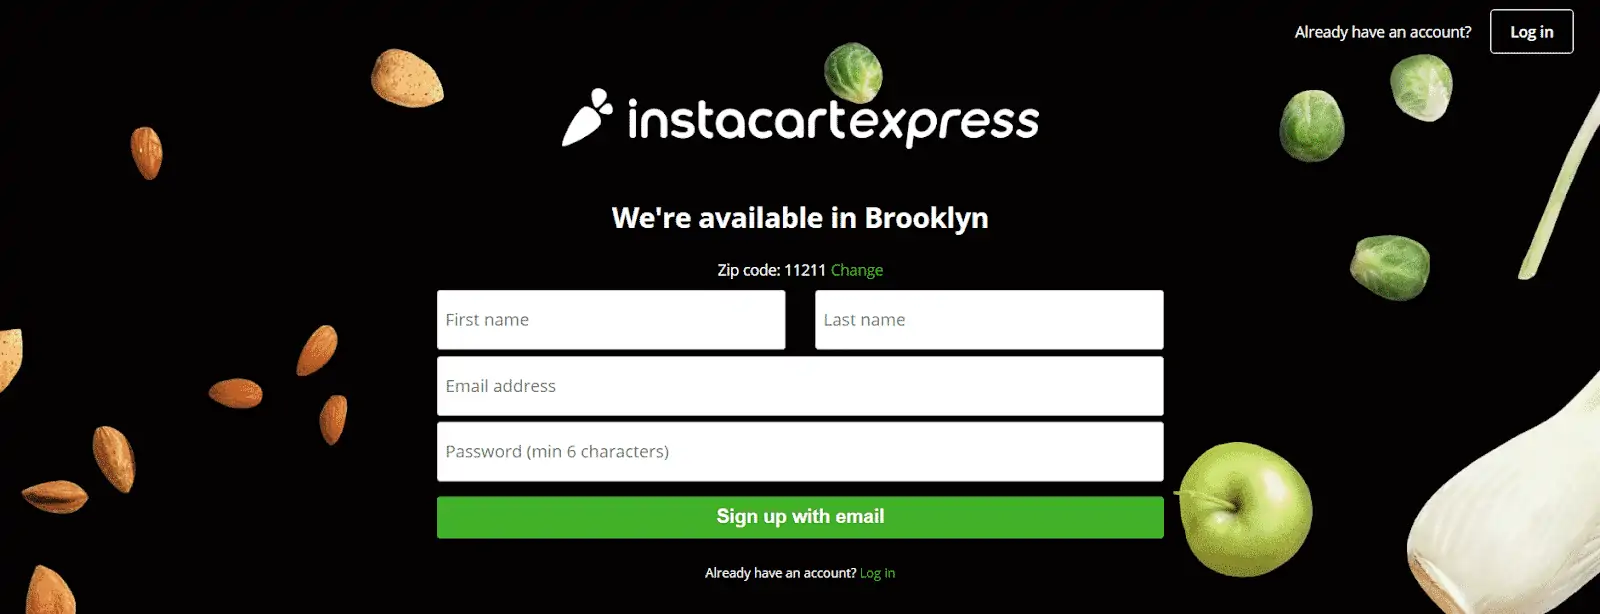 Instacart Express registration